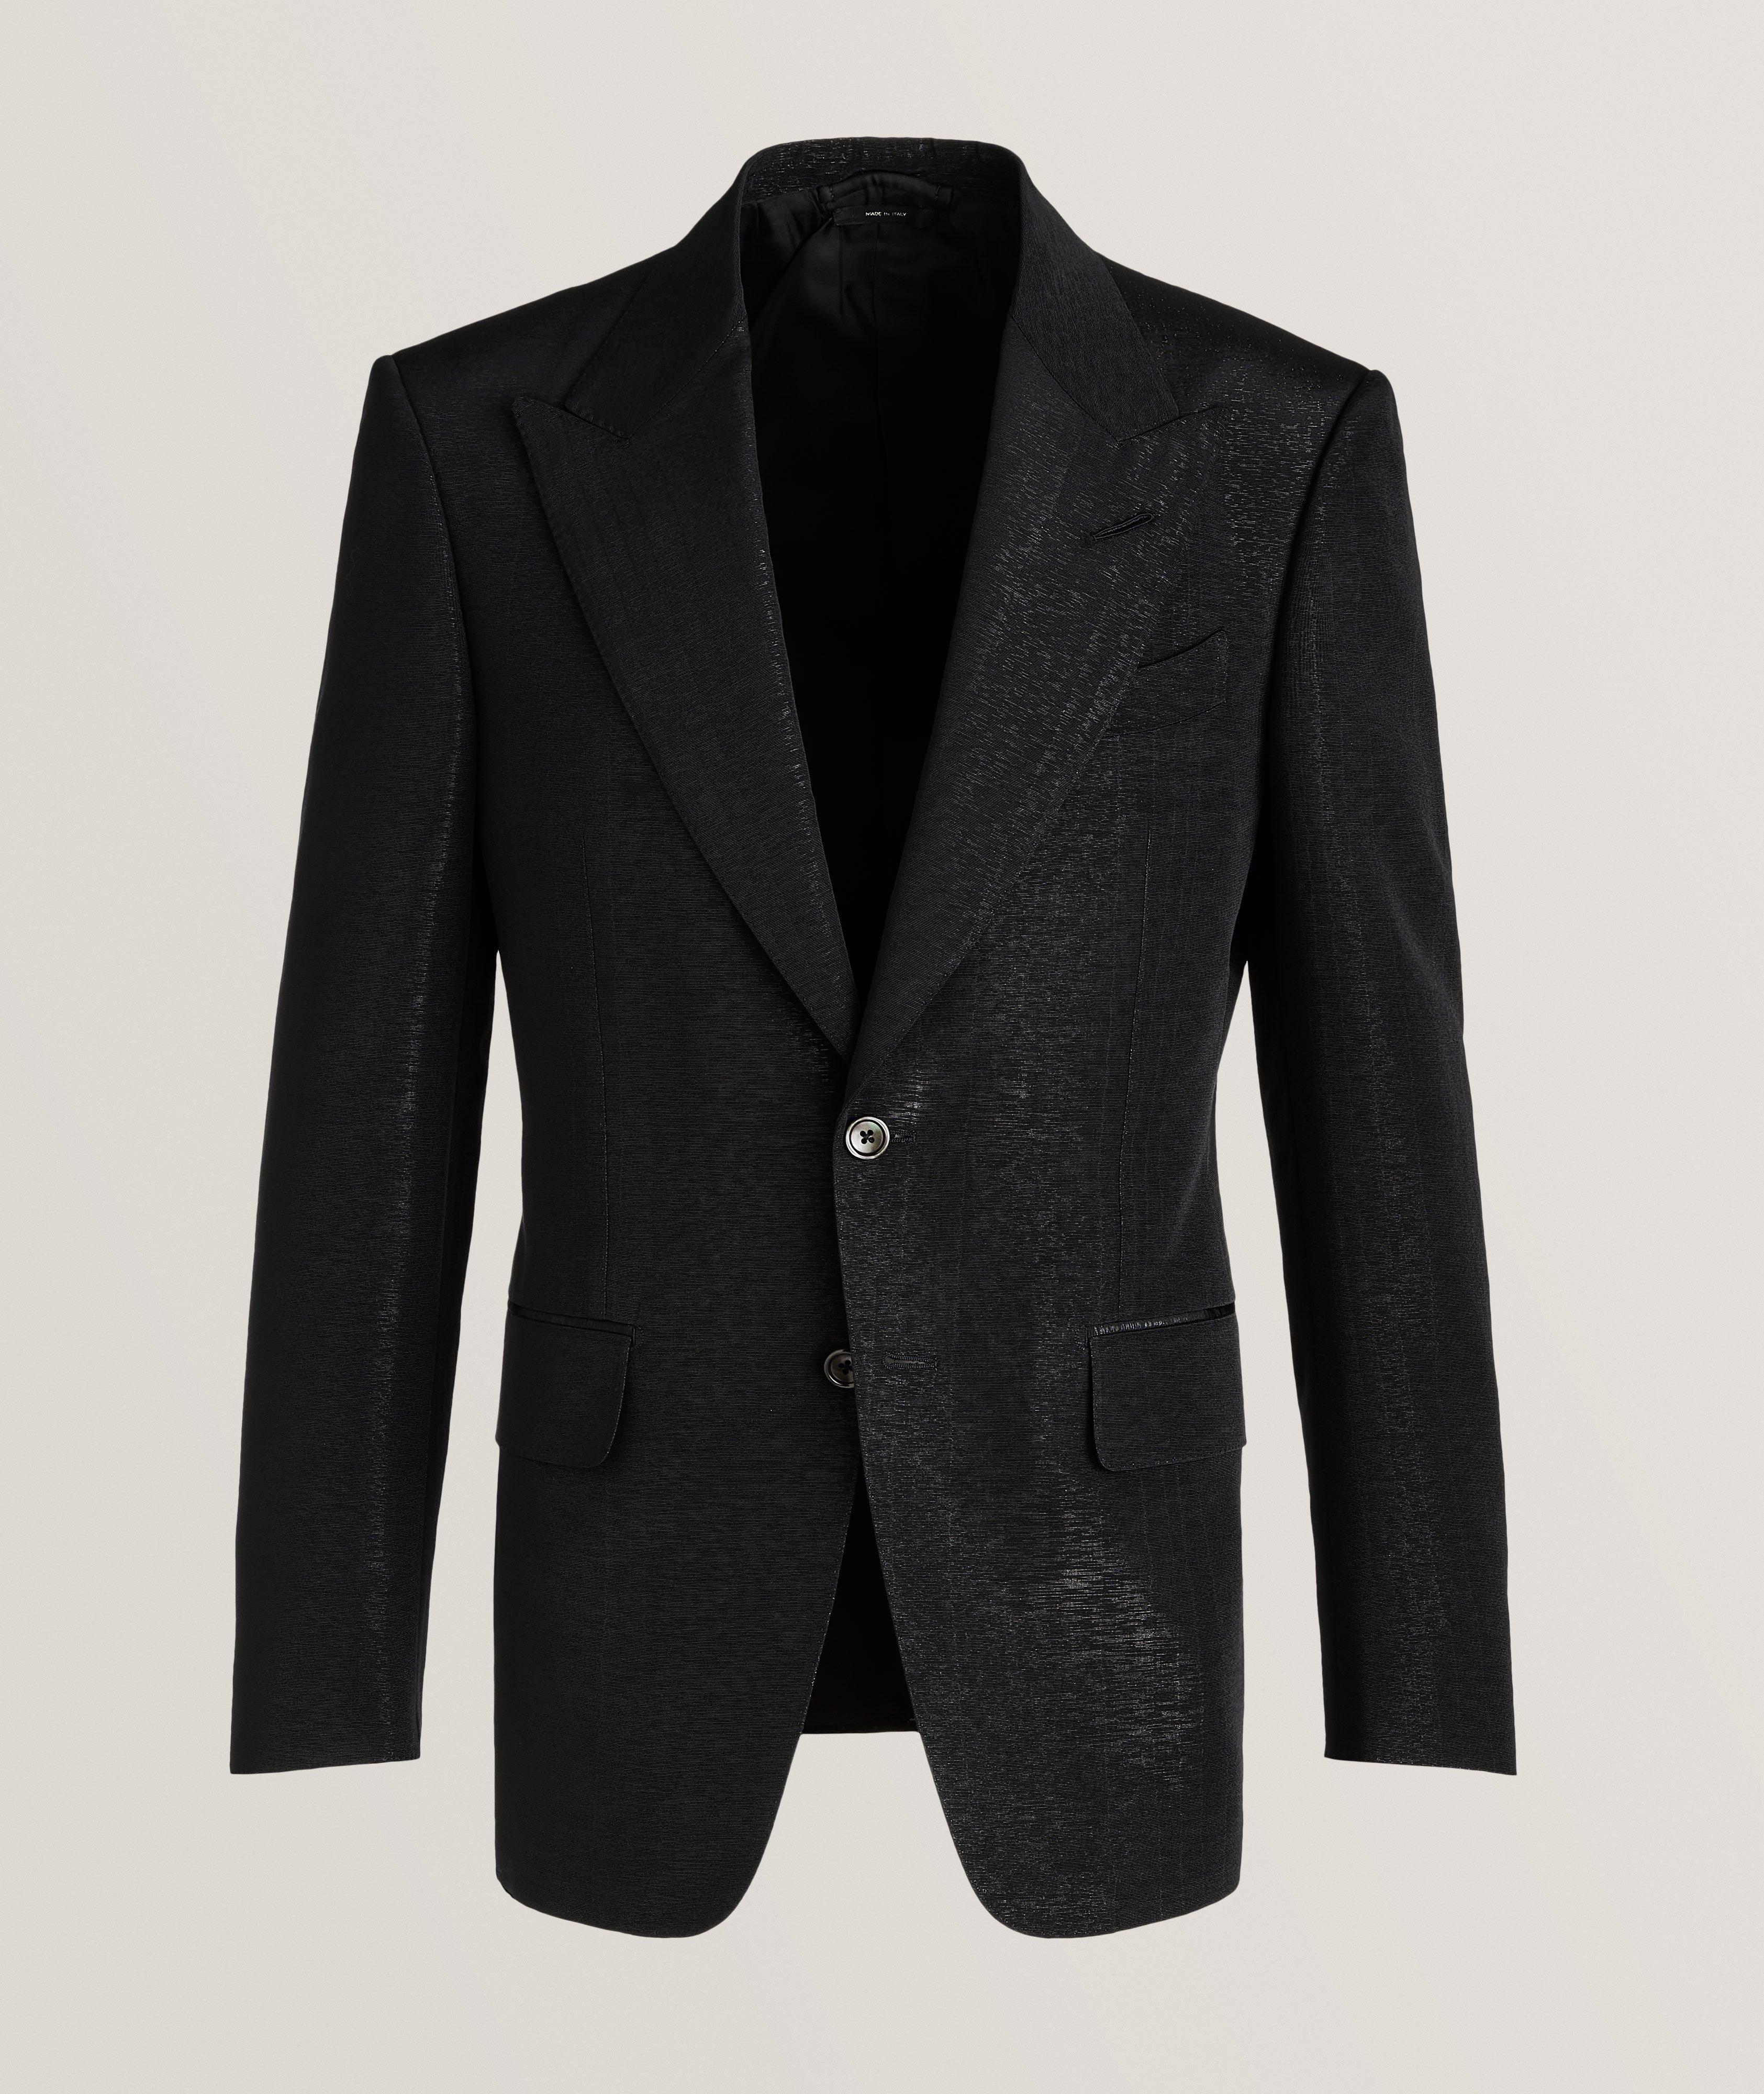 Shelton Metallic Weave Tuxedo Jacket image 0